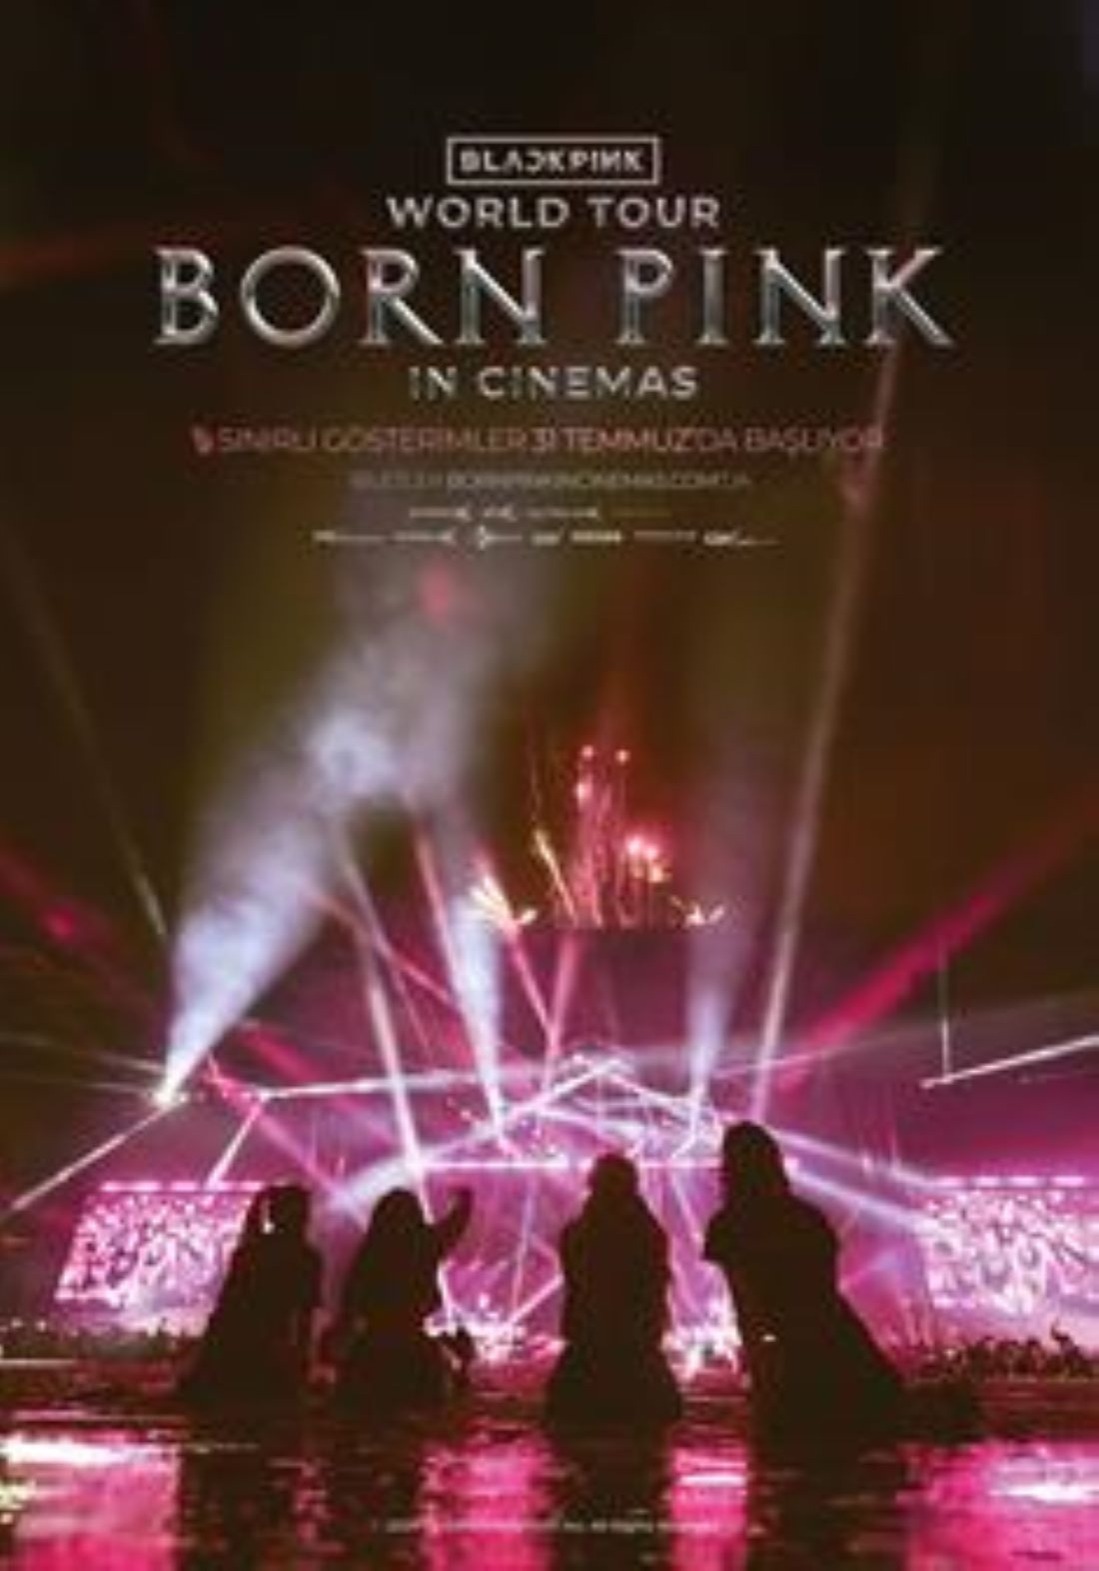 BLACKPINK WORLD TOUR(BORN PINK) IN CINEMAS